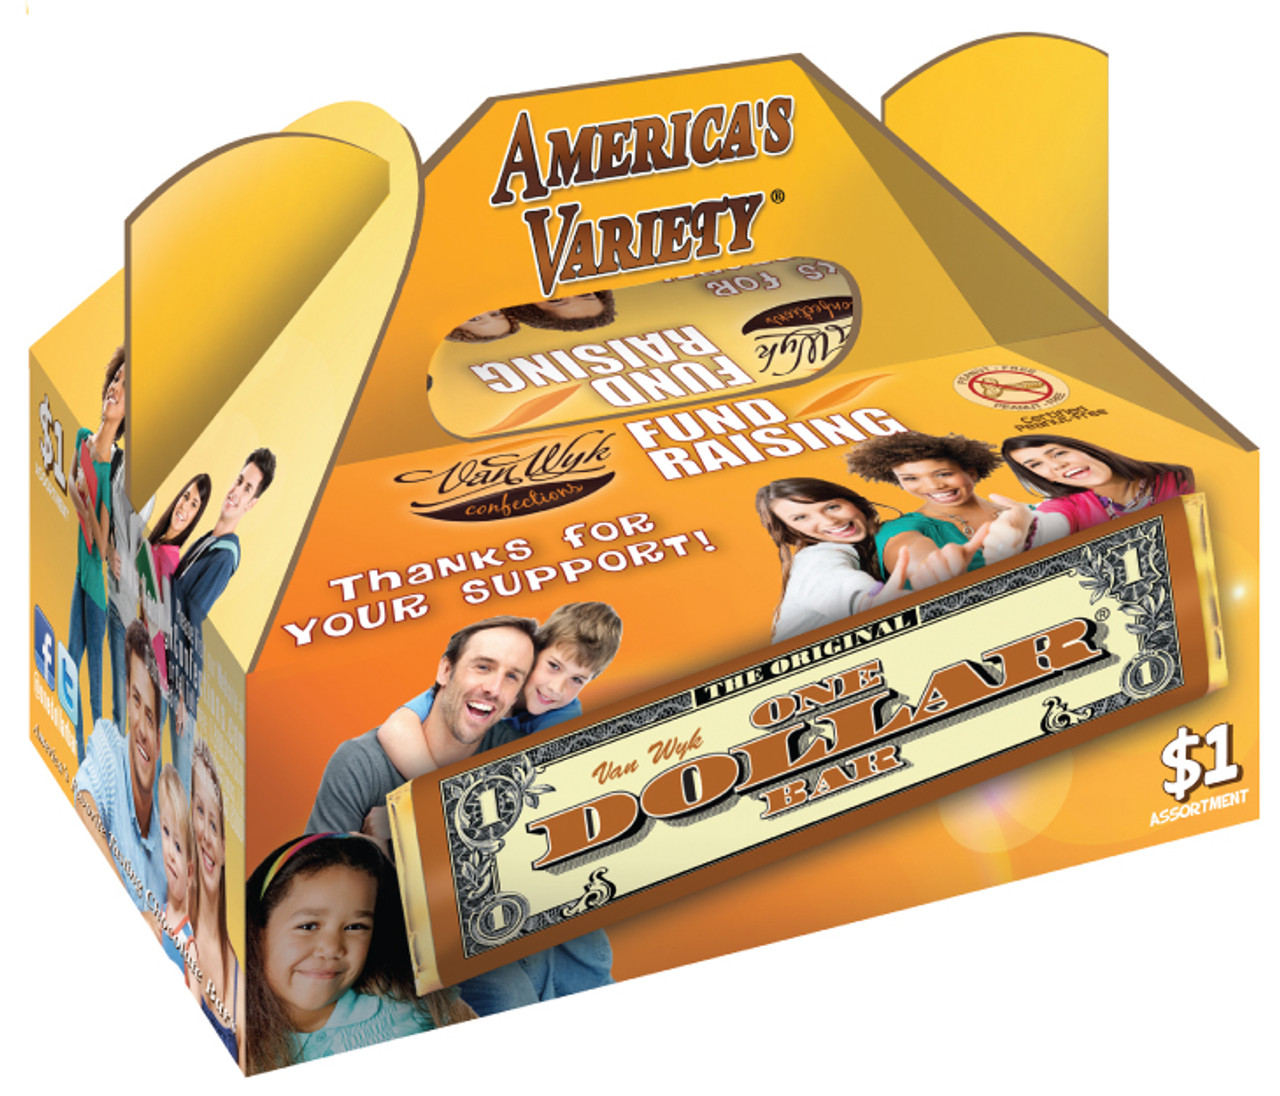 America's Variety Chocolate Candy Bar Fundraiser